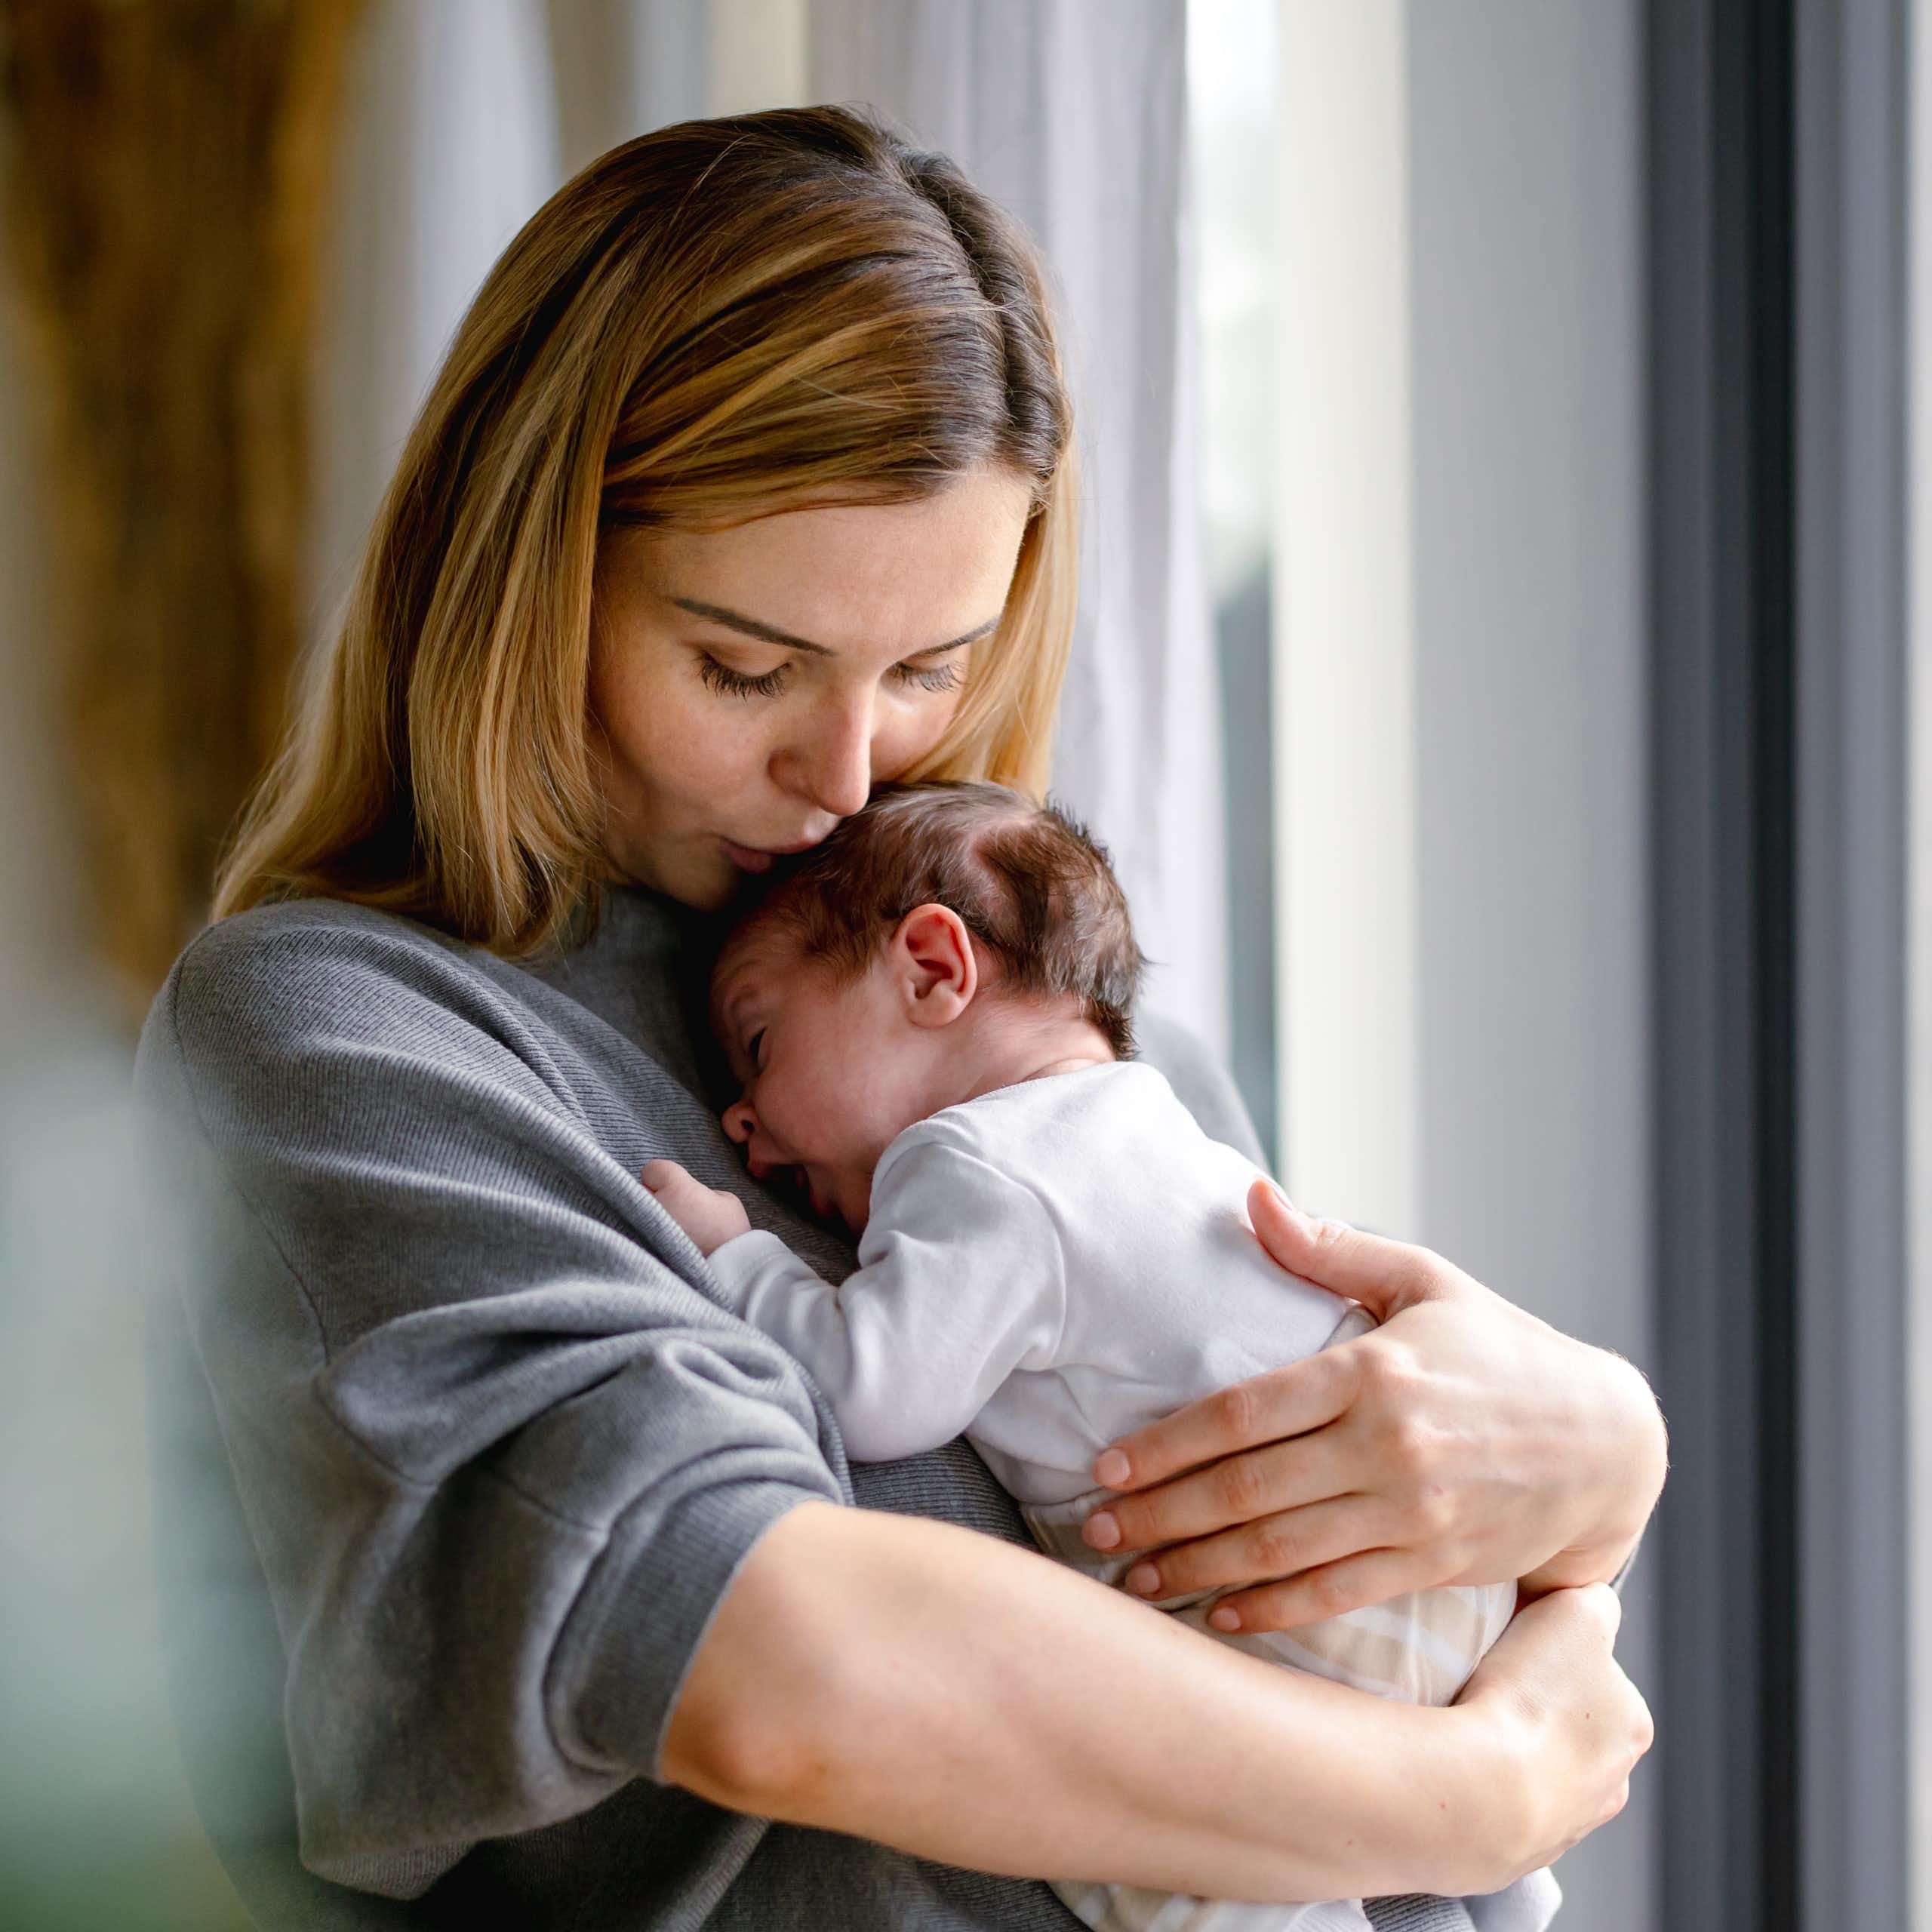 A woman holding a newborn baby.